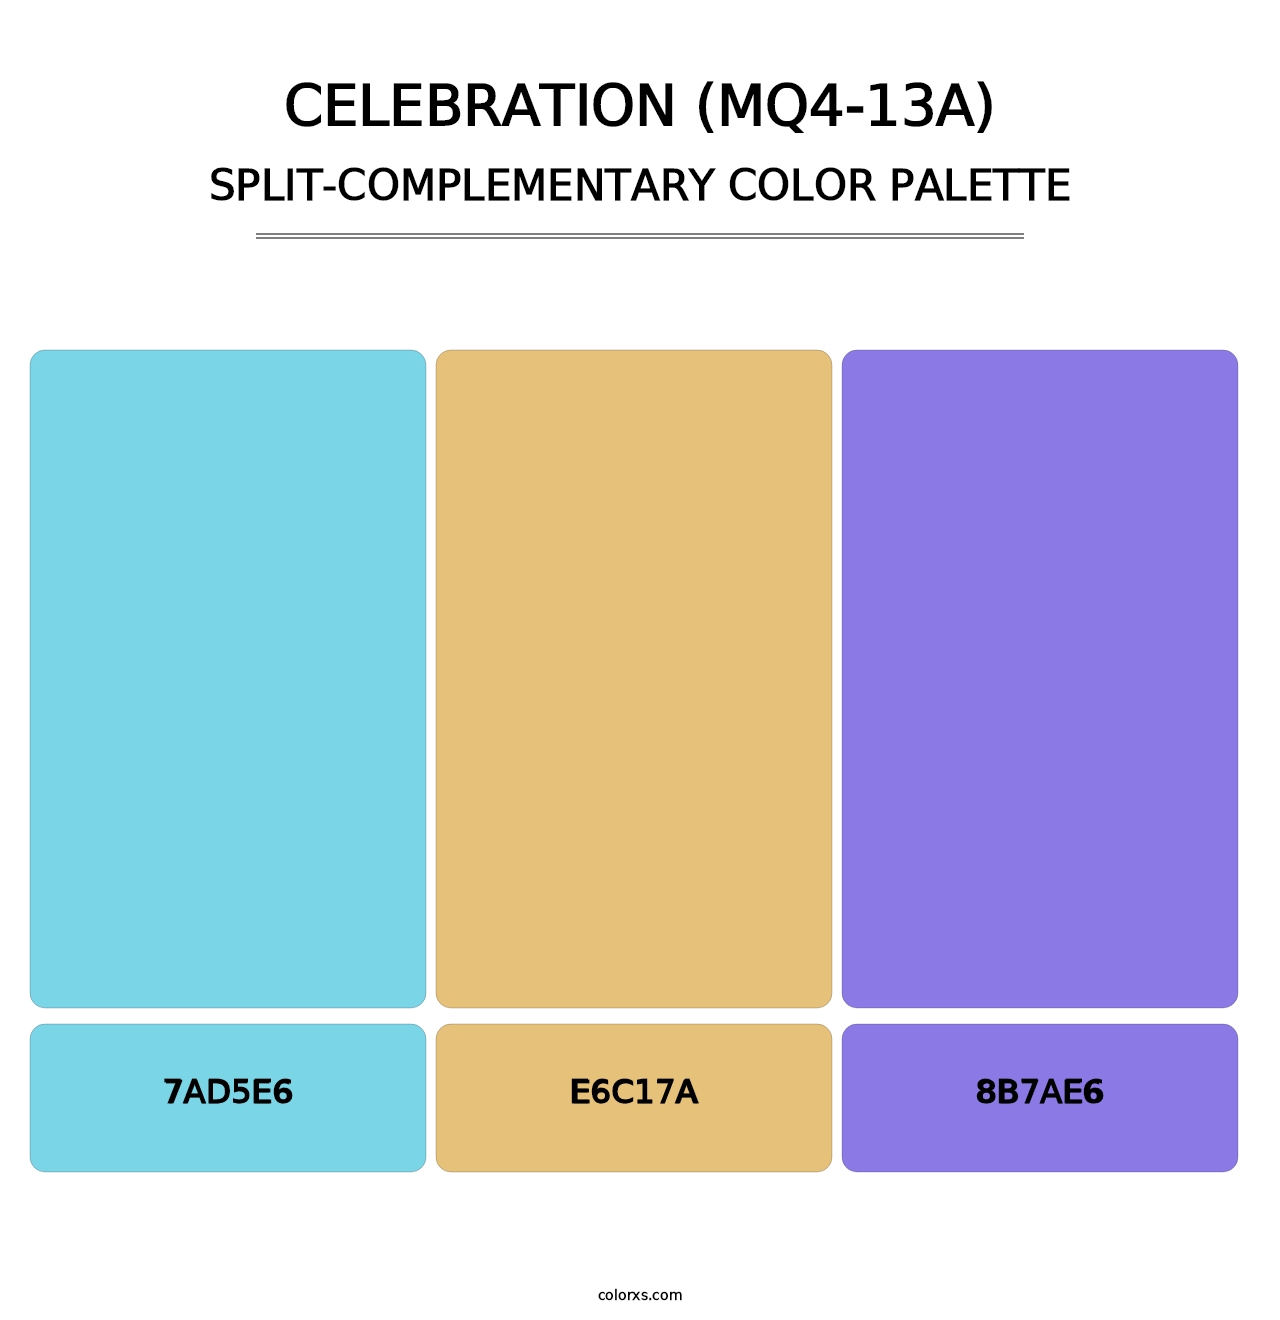 Celebration (MQ4-13A) - Split-Complementary Color Palette